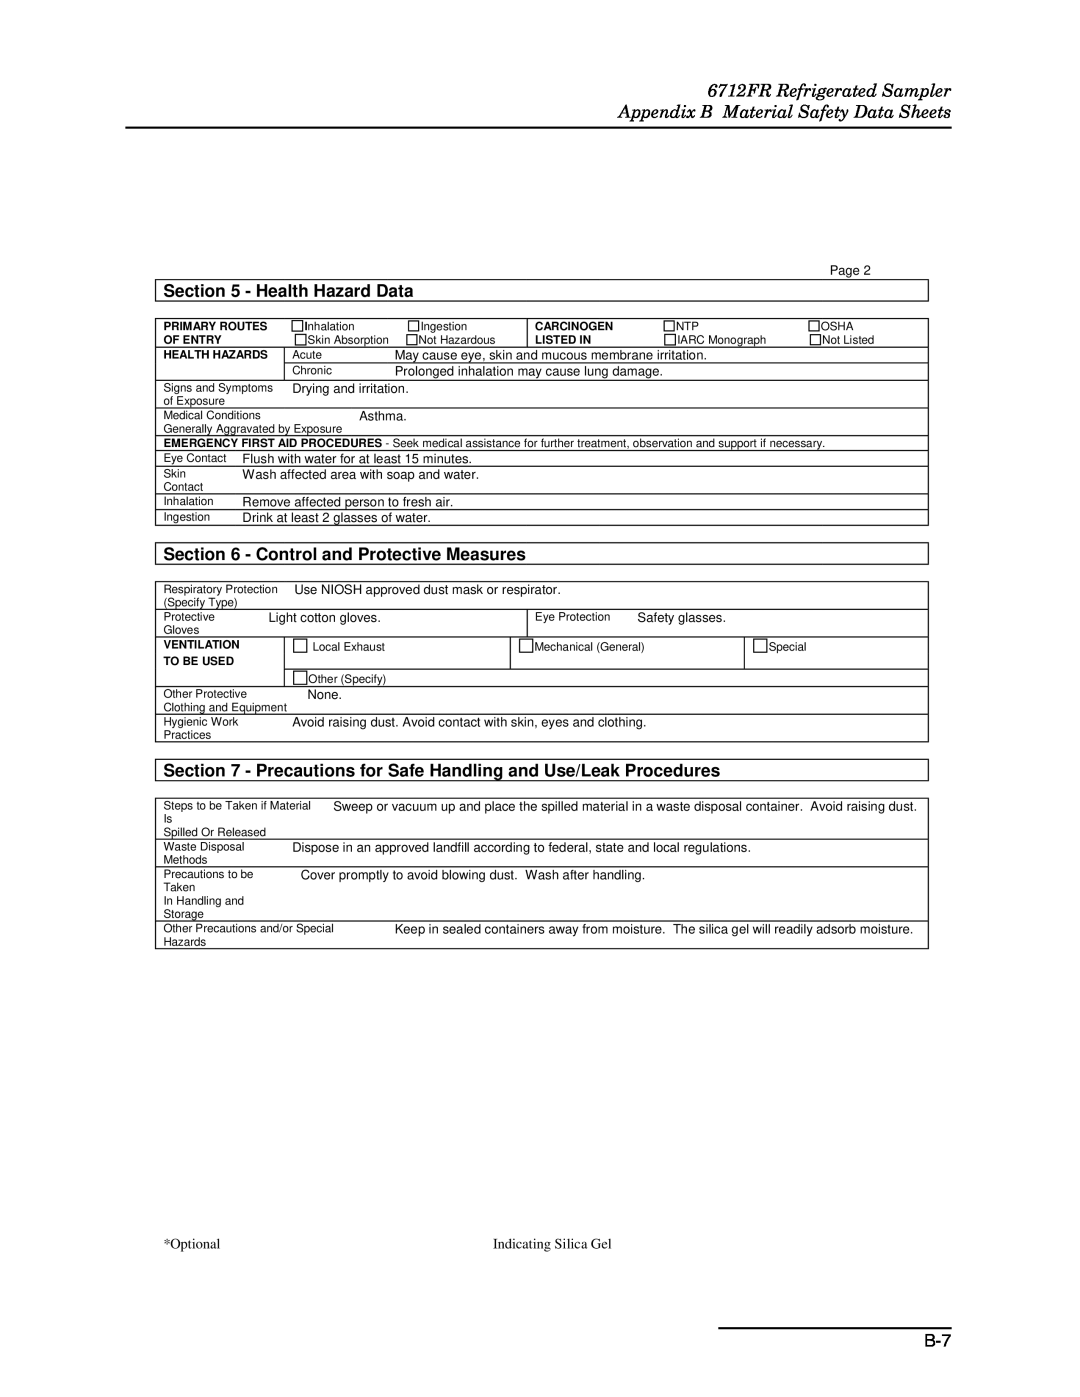 Teledyne manual 6712FR Refrigerated Sampler Appendix B Material Safety Data Sheets, Health Hazard Data 